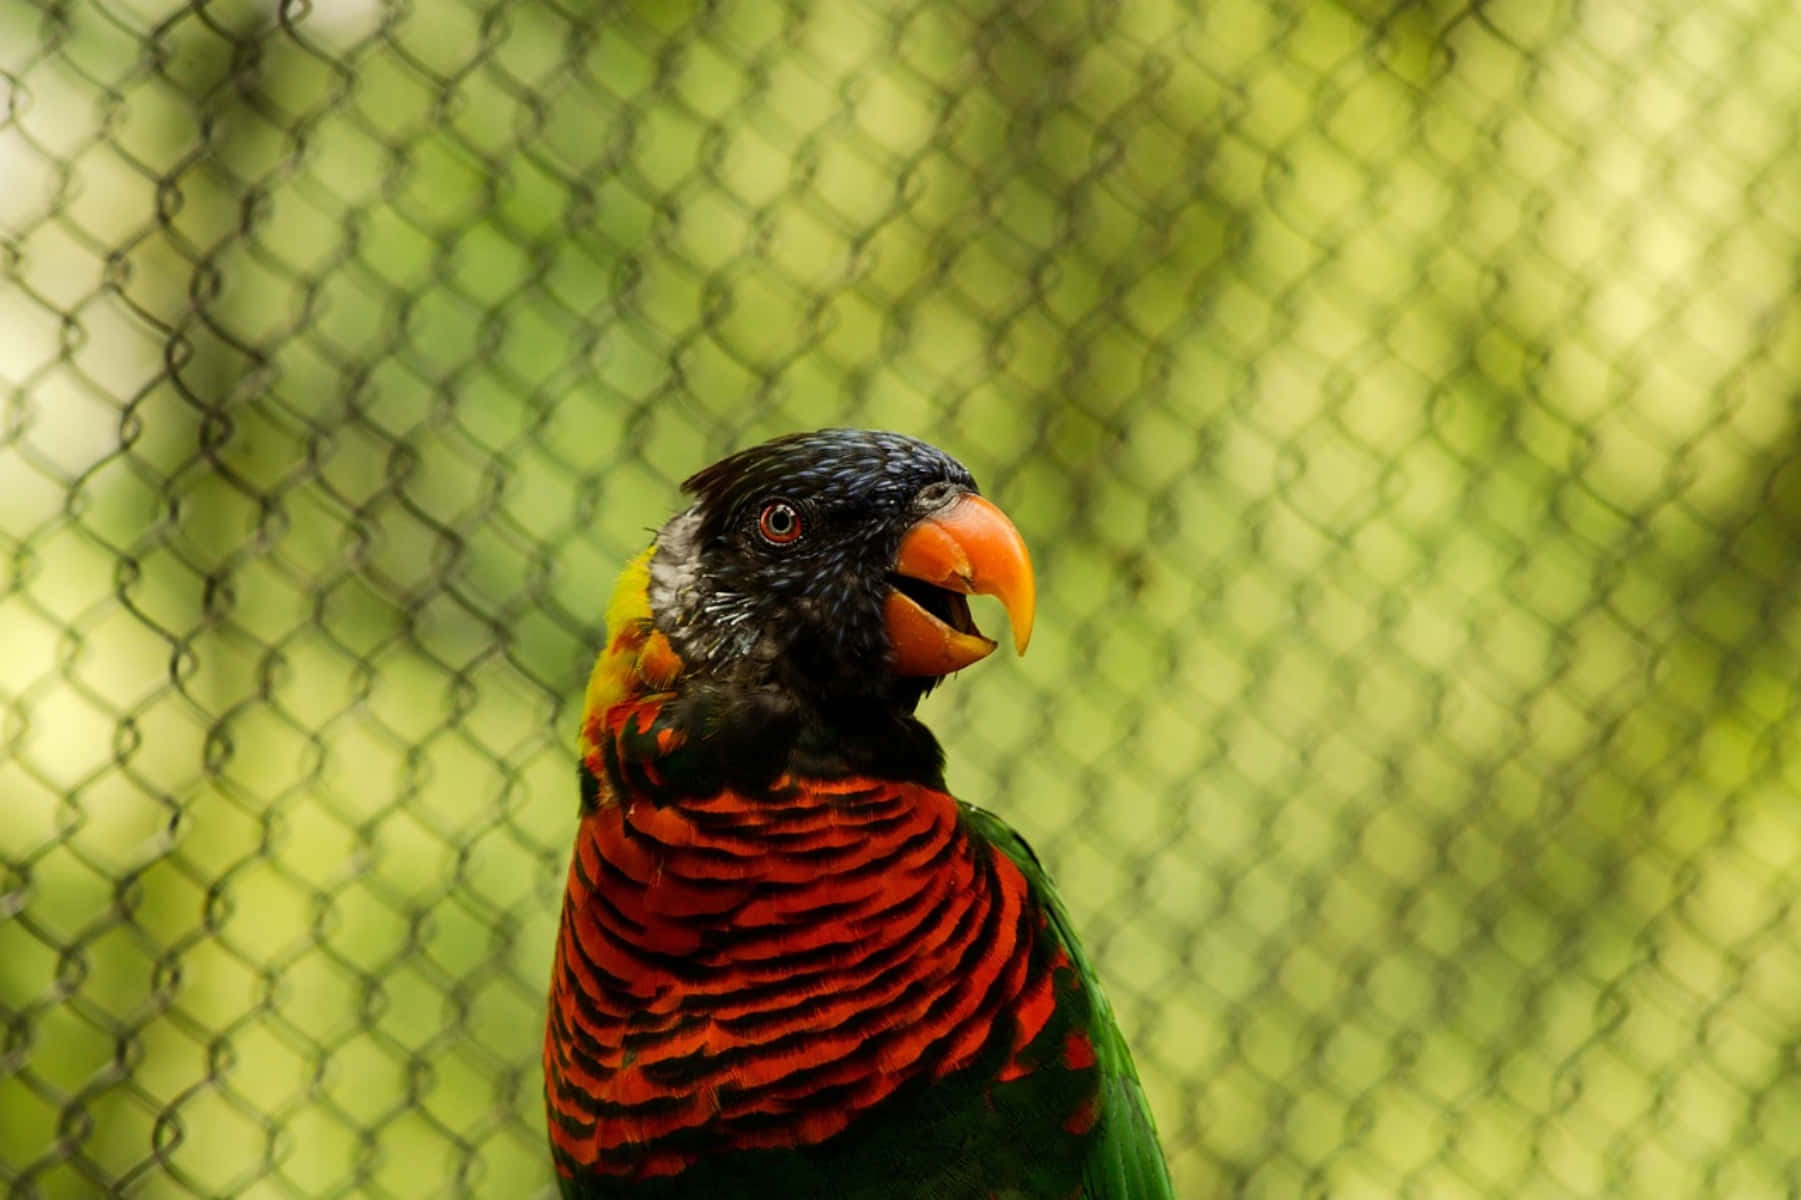 Colorful Lory Bird Portrait.jpg Wallpaper